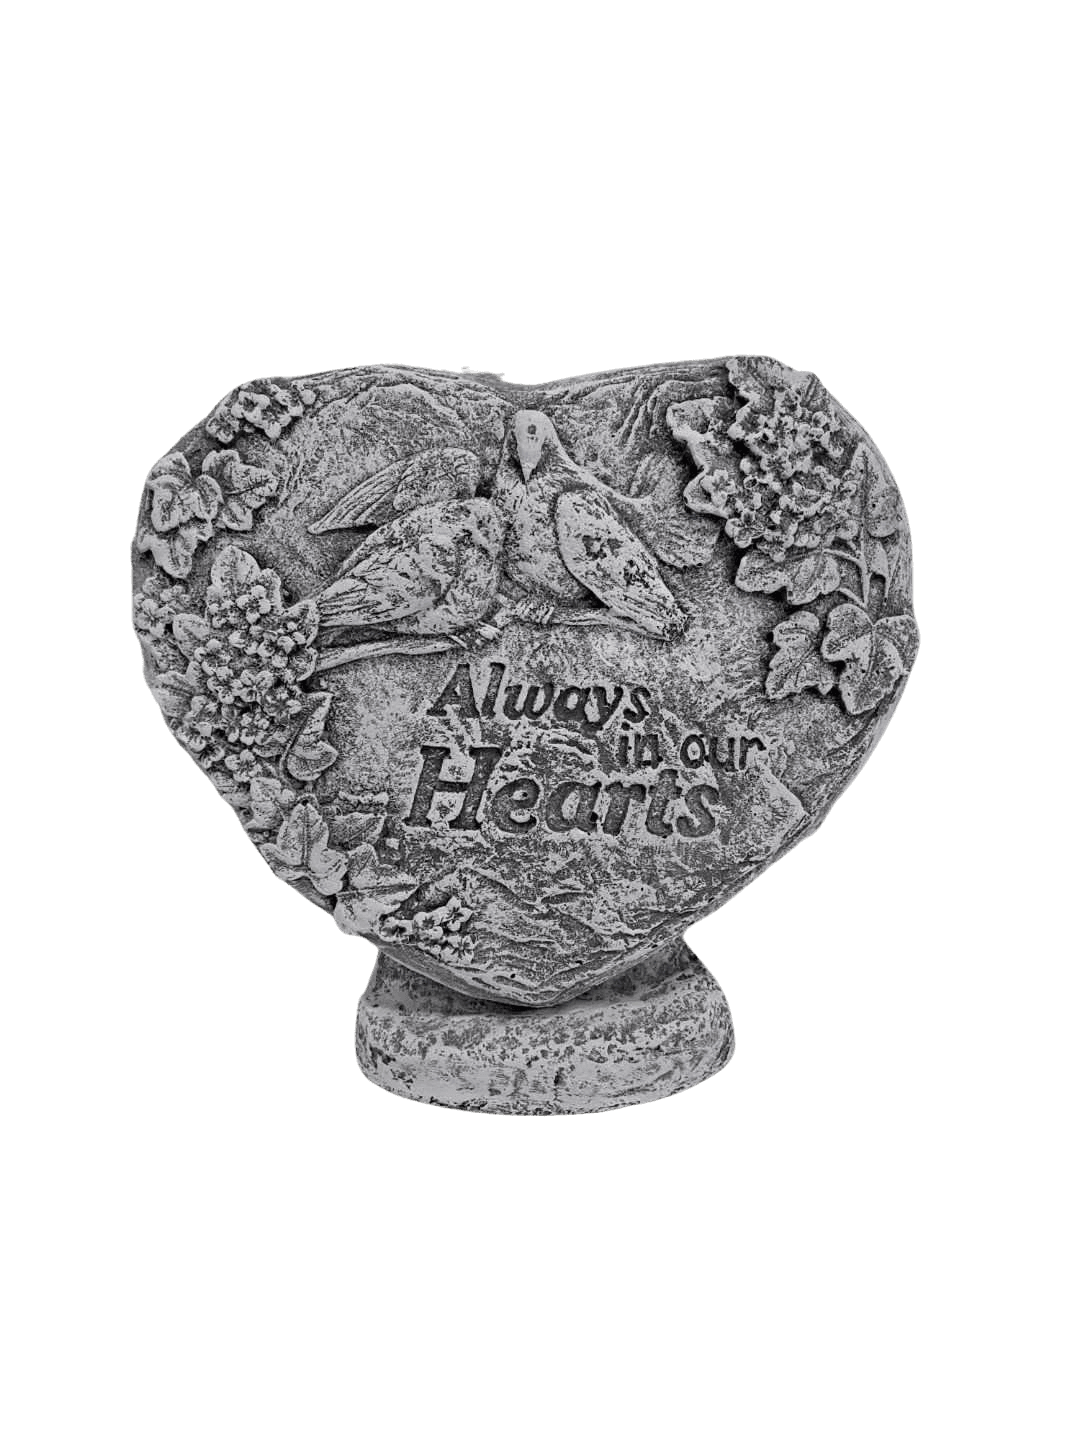 Heart Stone flower arrangement